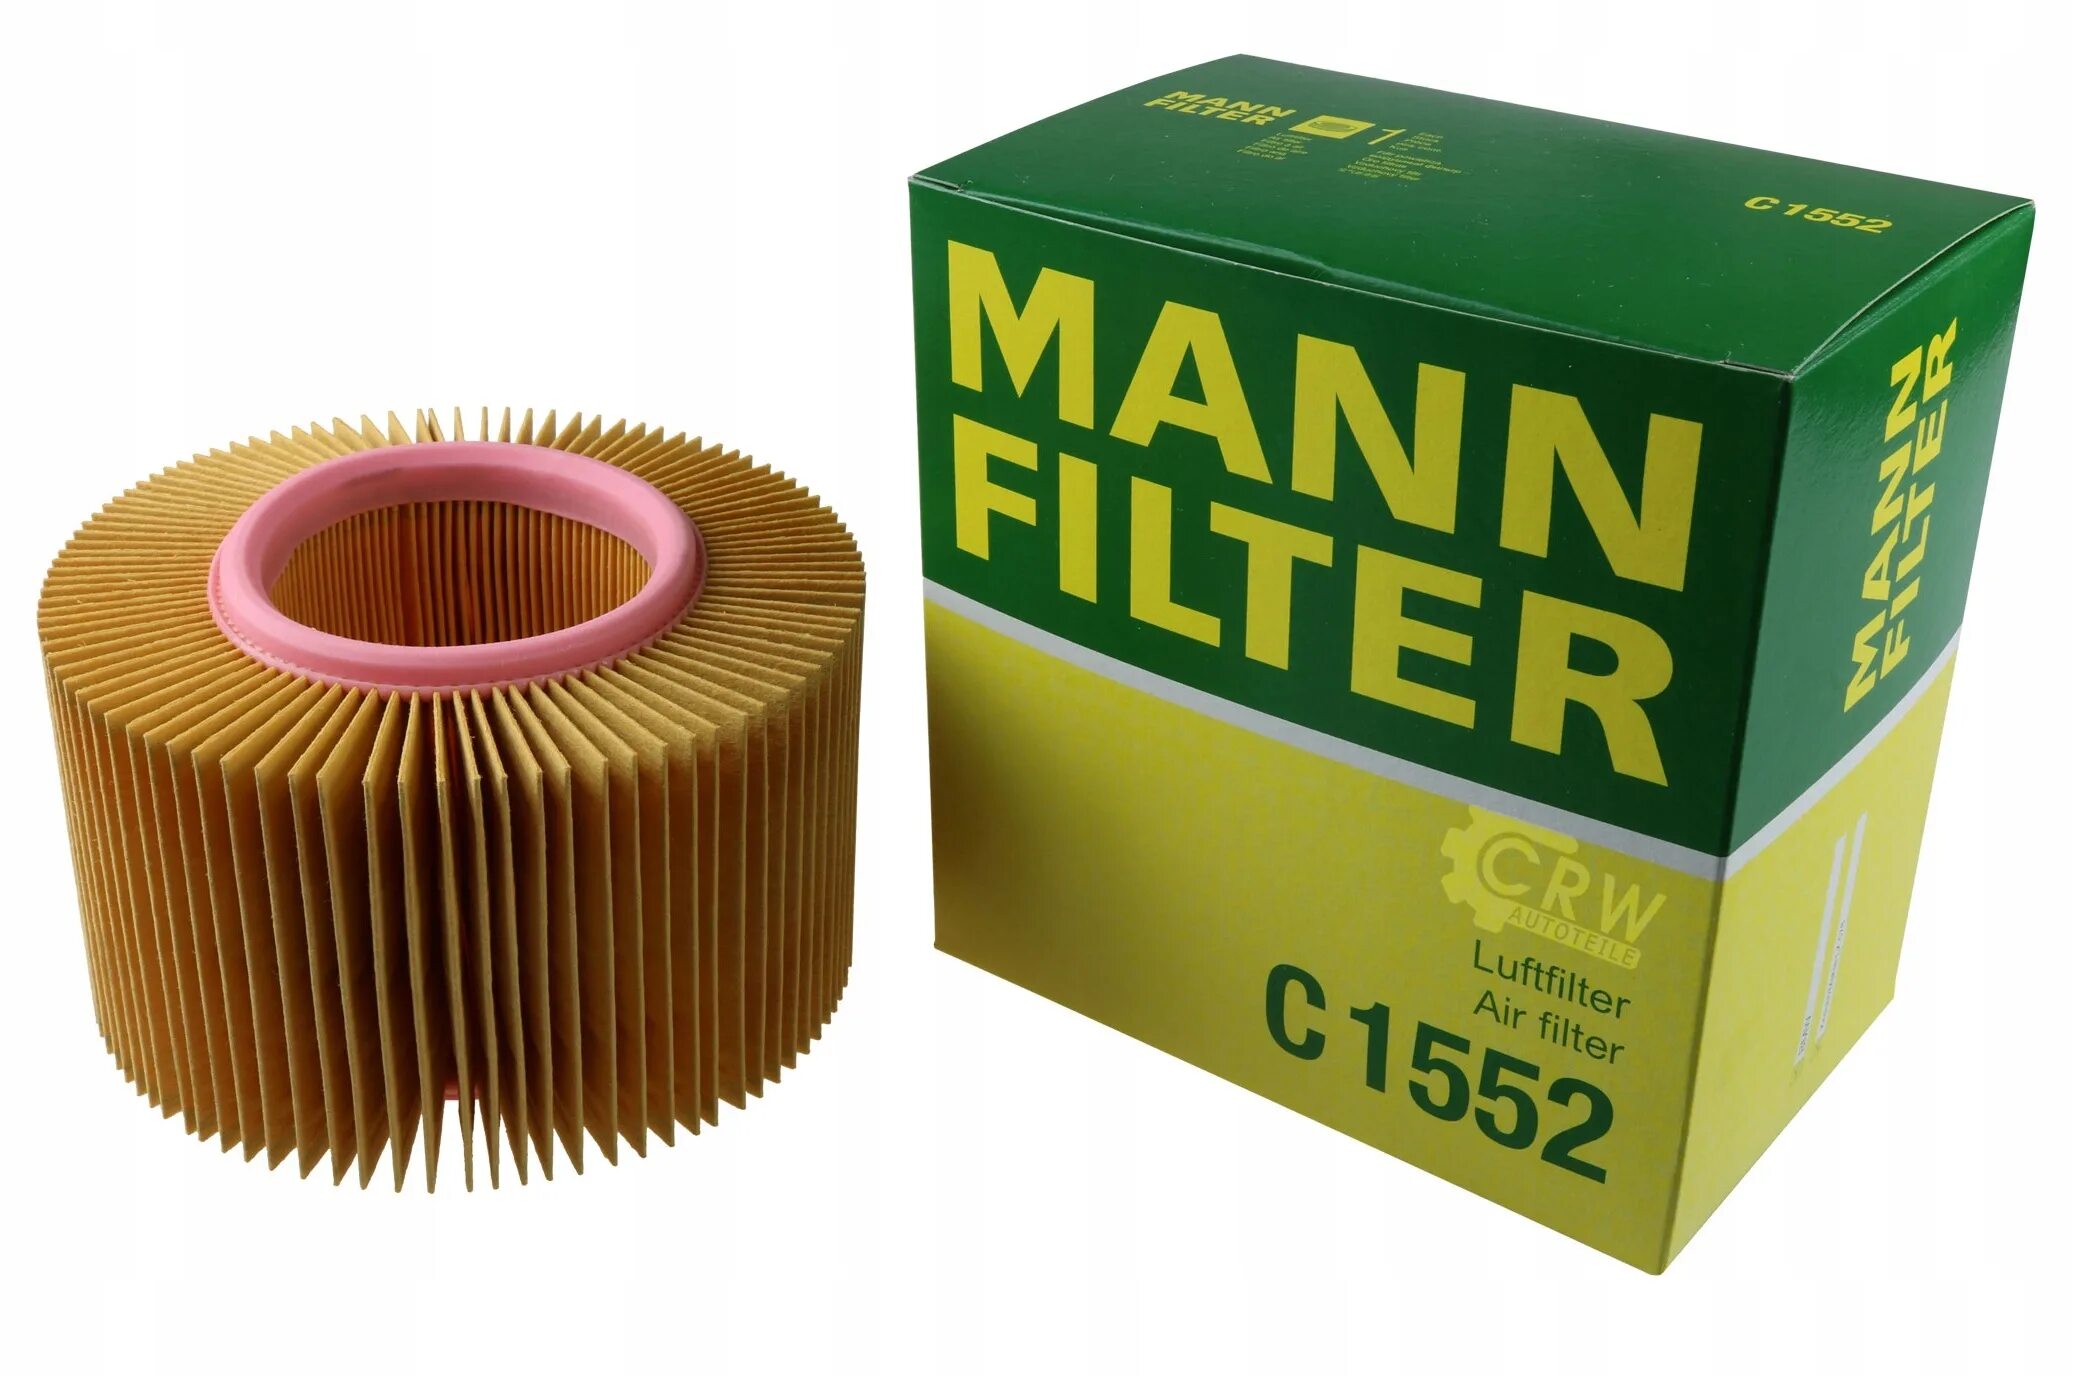 Mann фильтр оригинал. Фильтр воздушный BMW r1150rt. Mann-Filter c 2420. Фильтр Манн воздушный f 2000. Фильтр масляный r1100rt.